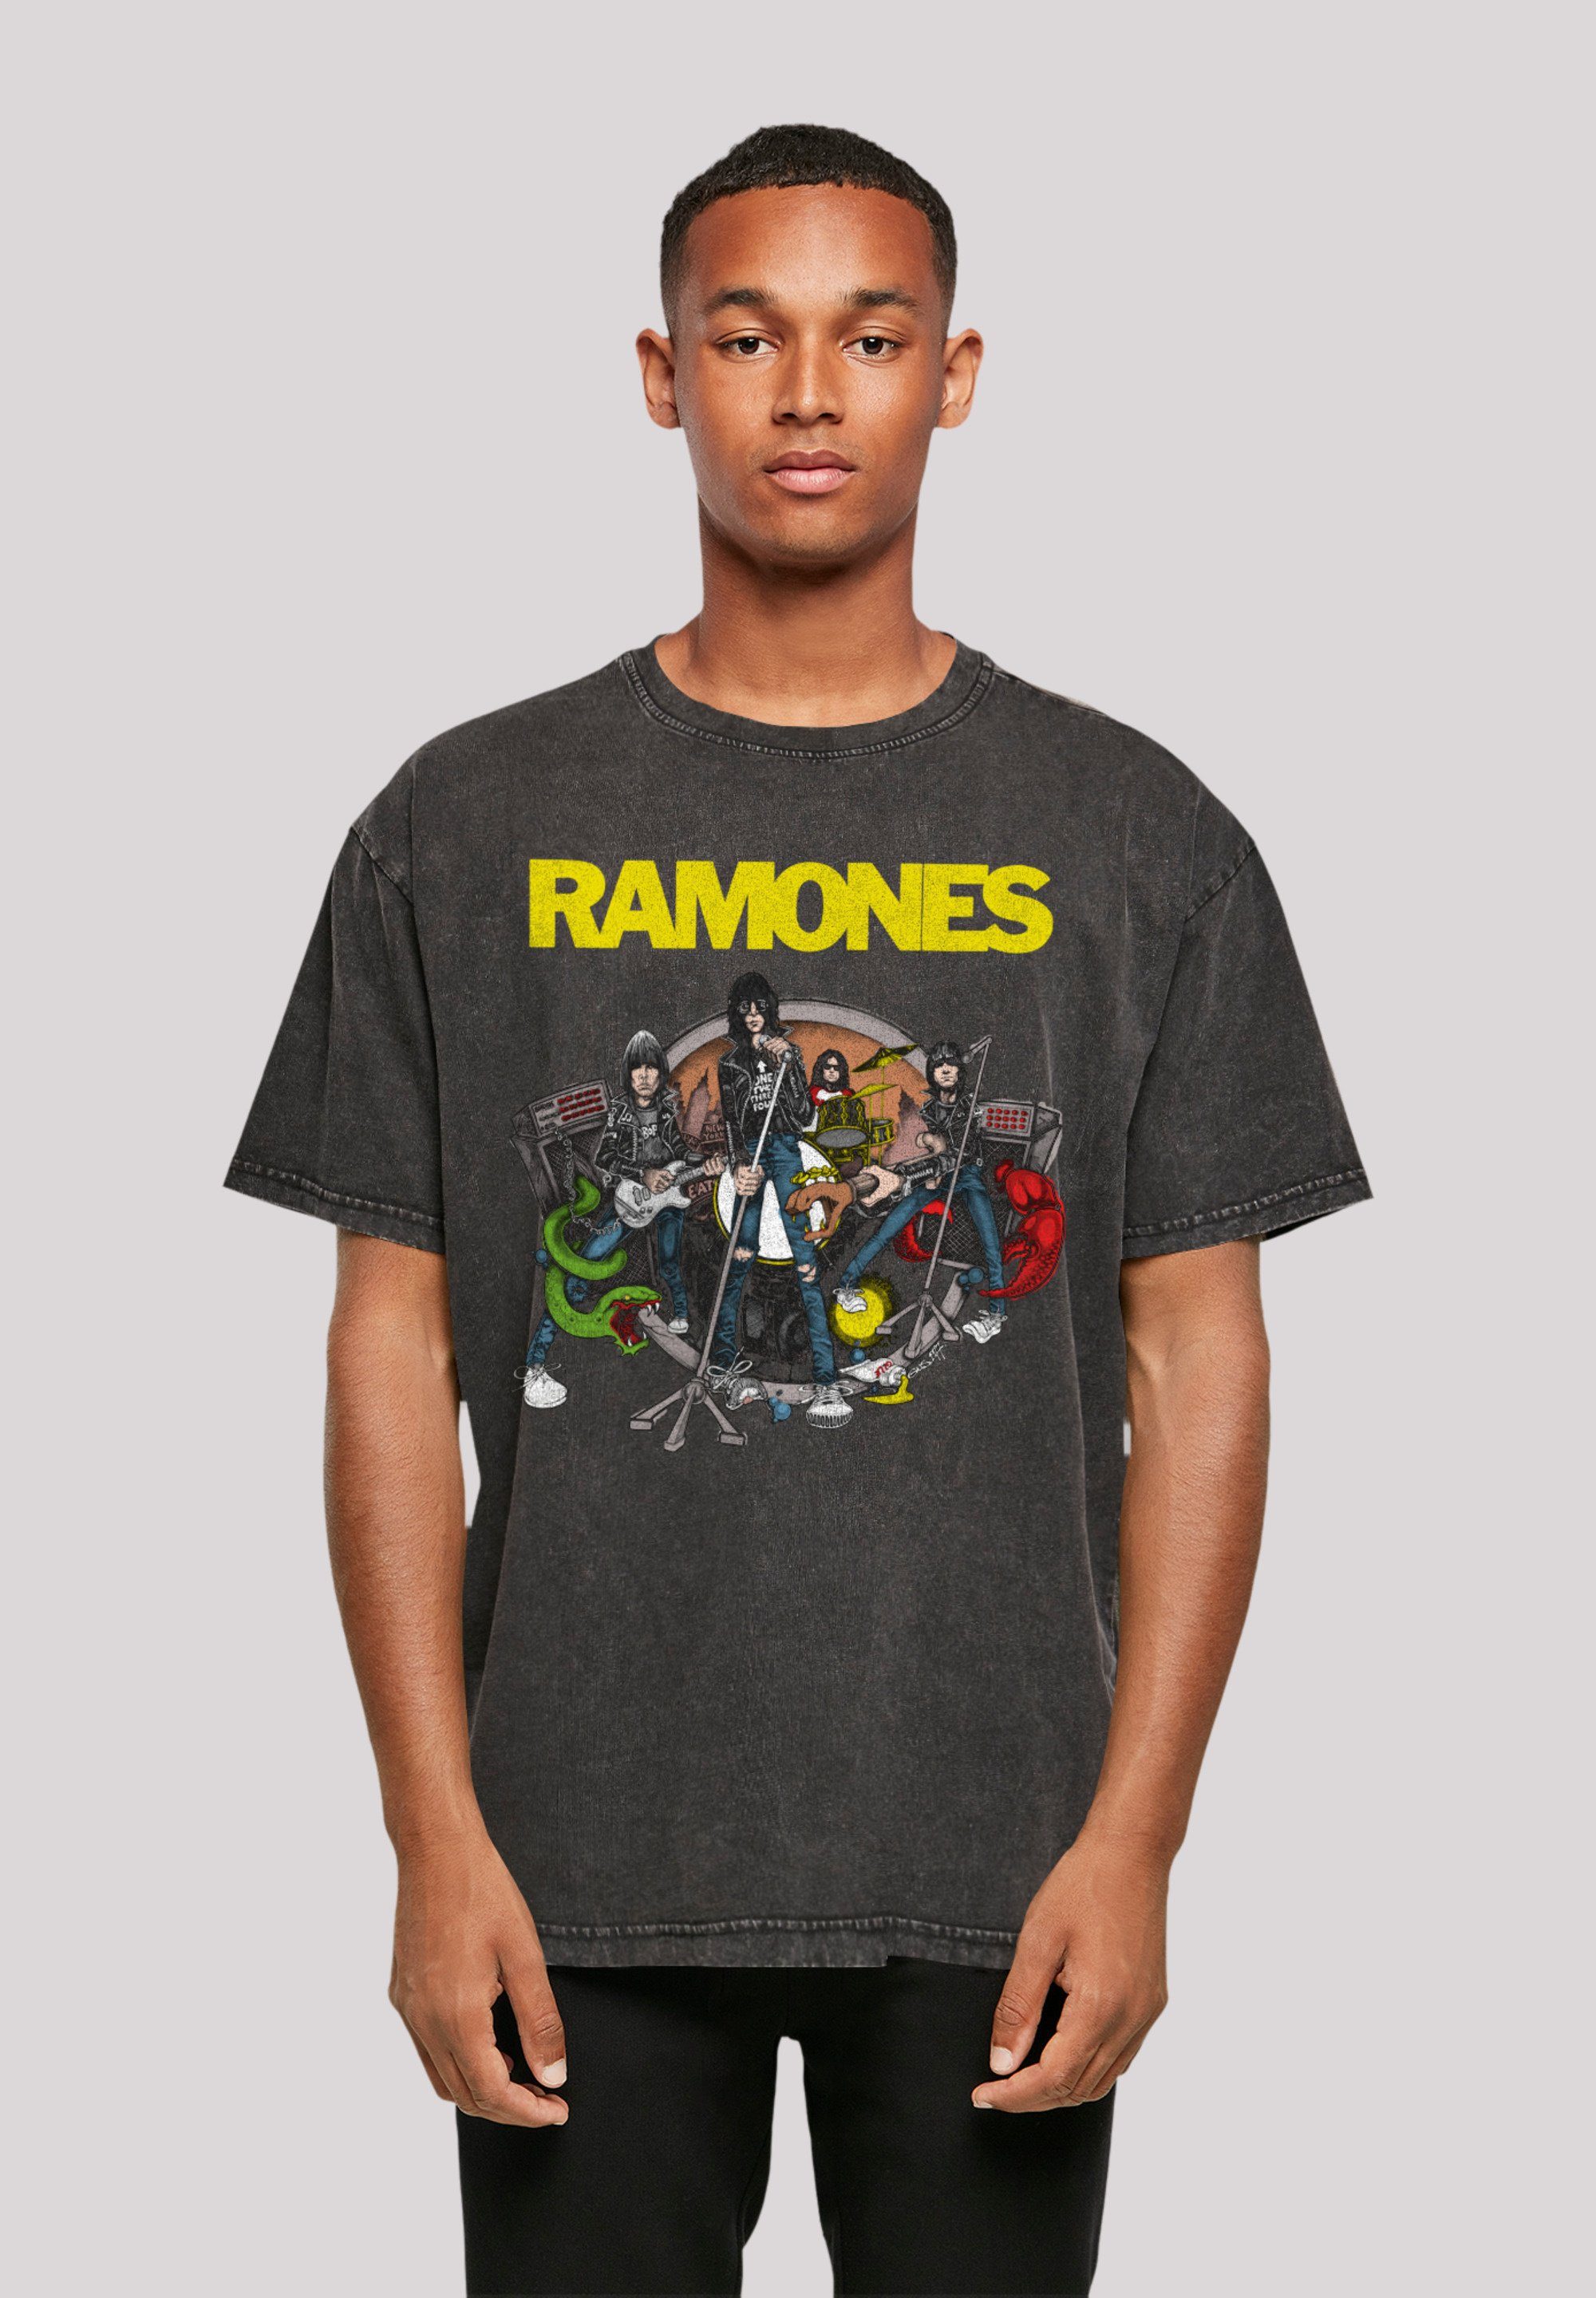 Road Band To Band, Musik Ruin Rock-Musik Premium Ramones schwarz Qualität, T-Shirt F4NT4STIC Rock